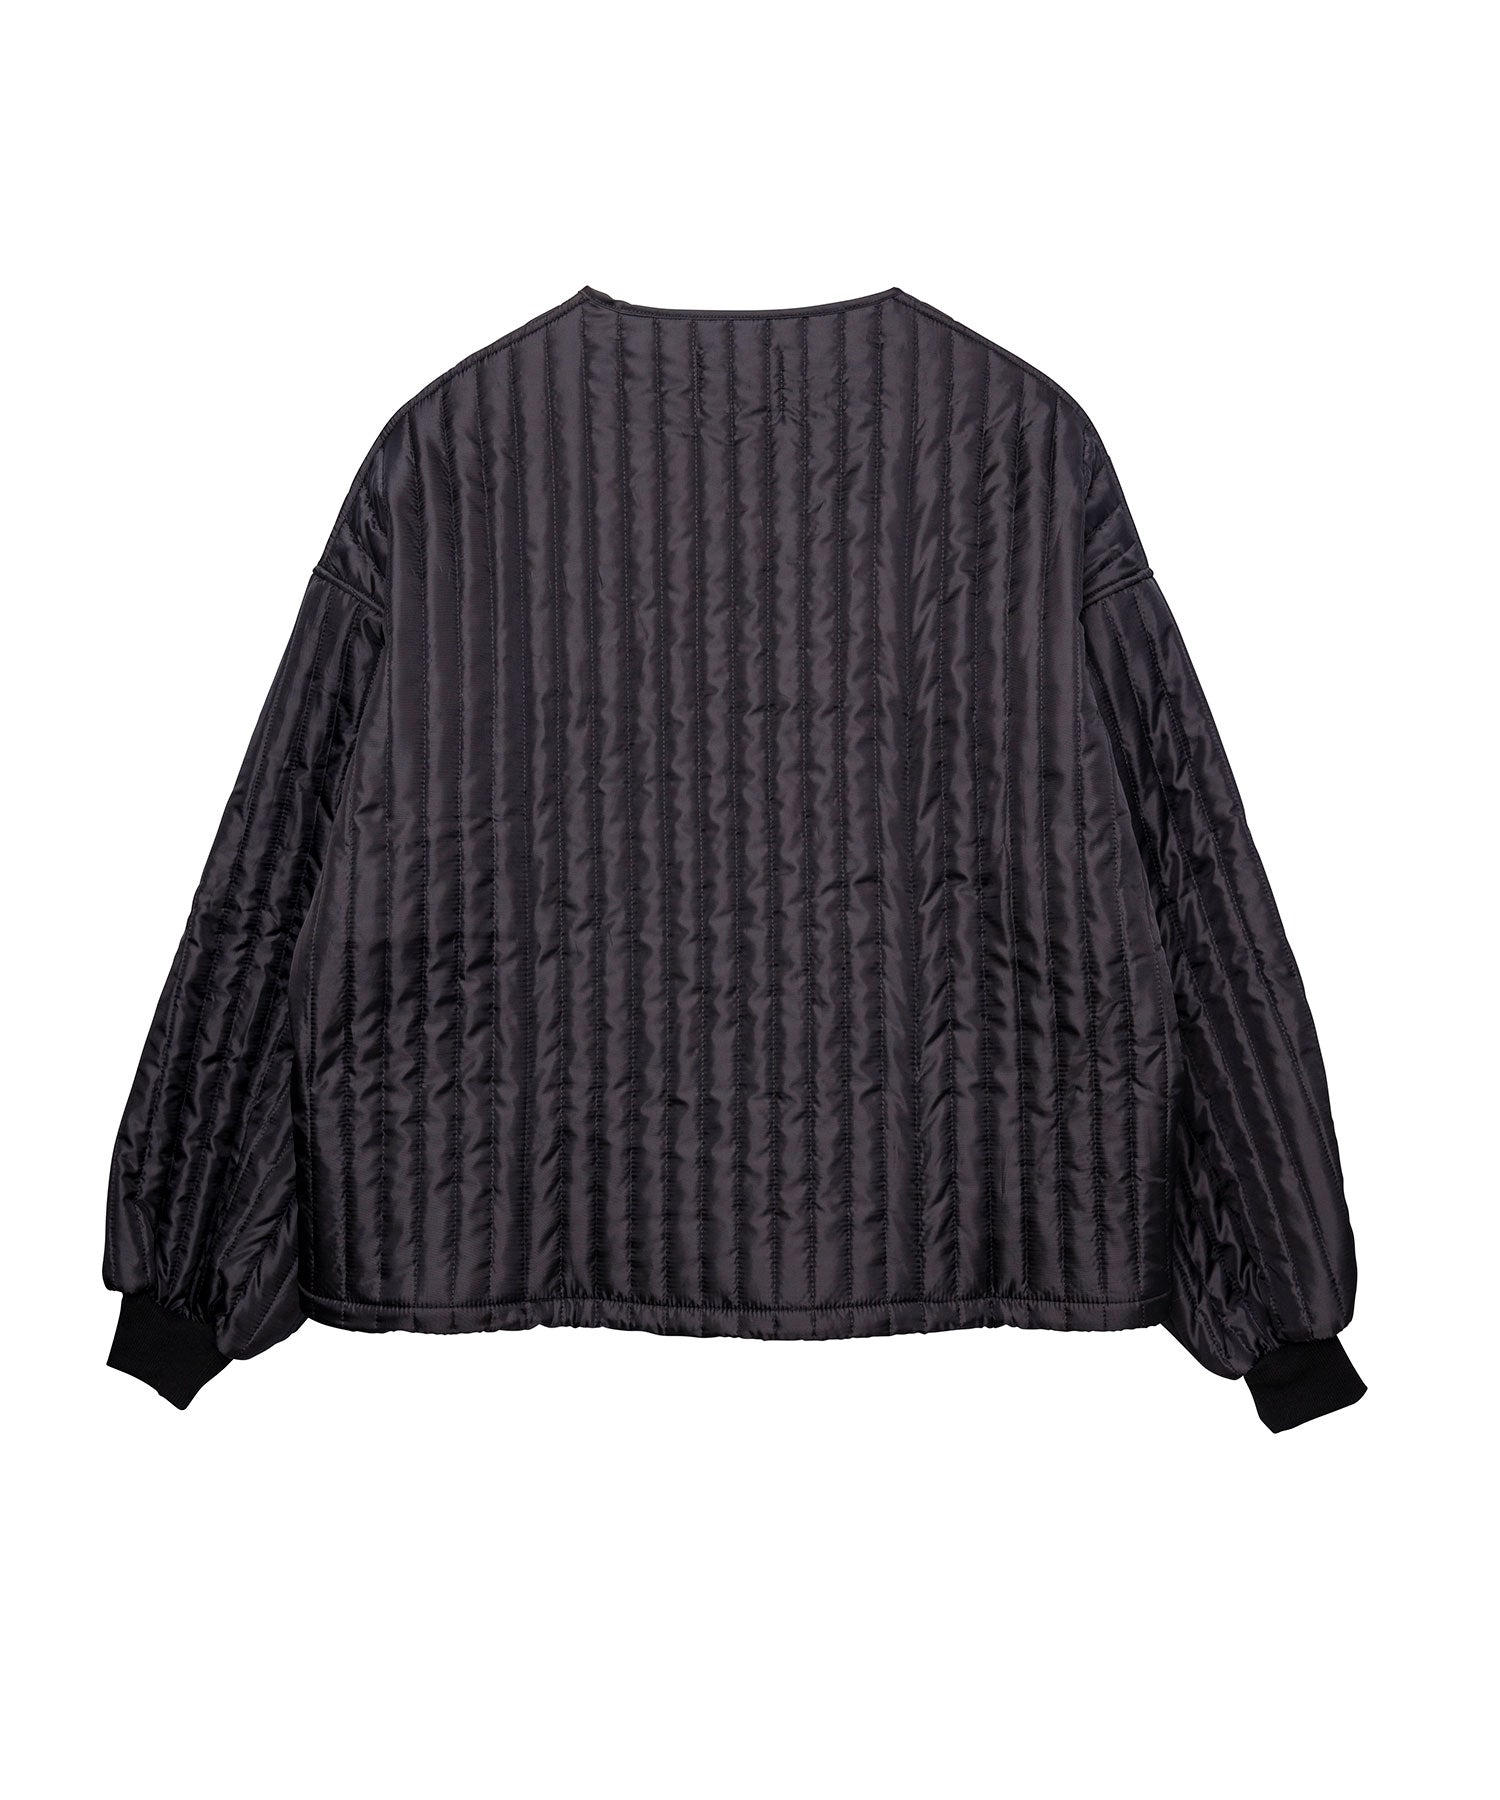 【INTERPLAY x AYUMI】Quilted Blouson Coat(UNISEX) -BLACK-  623542012-19